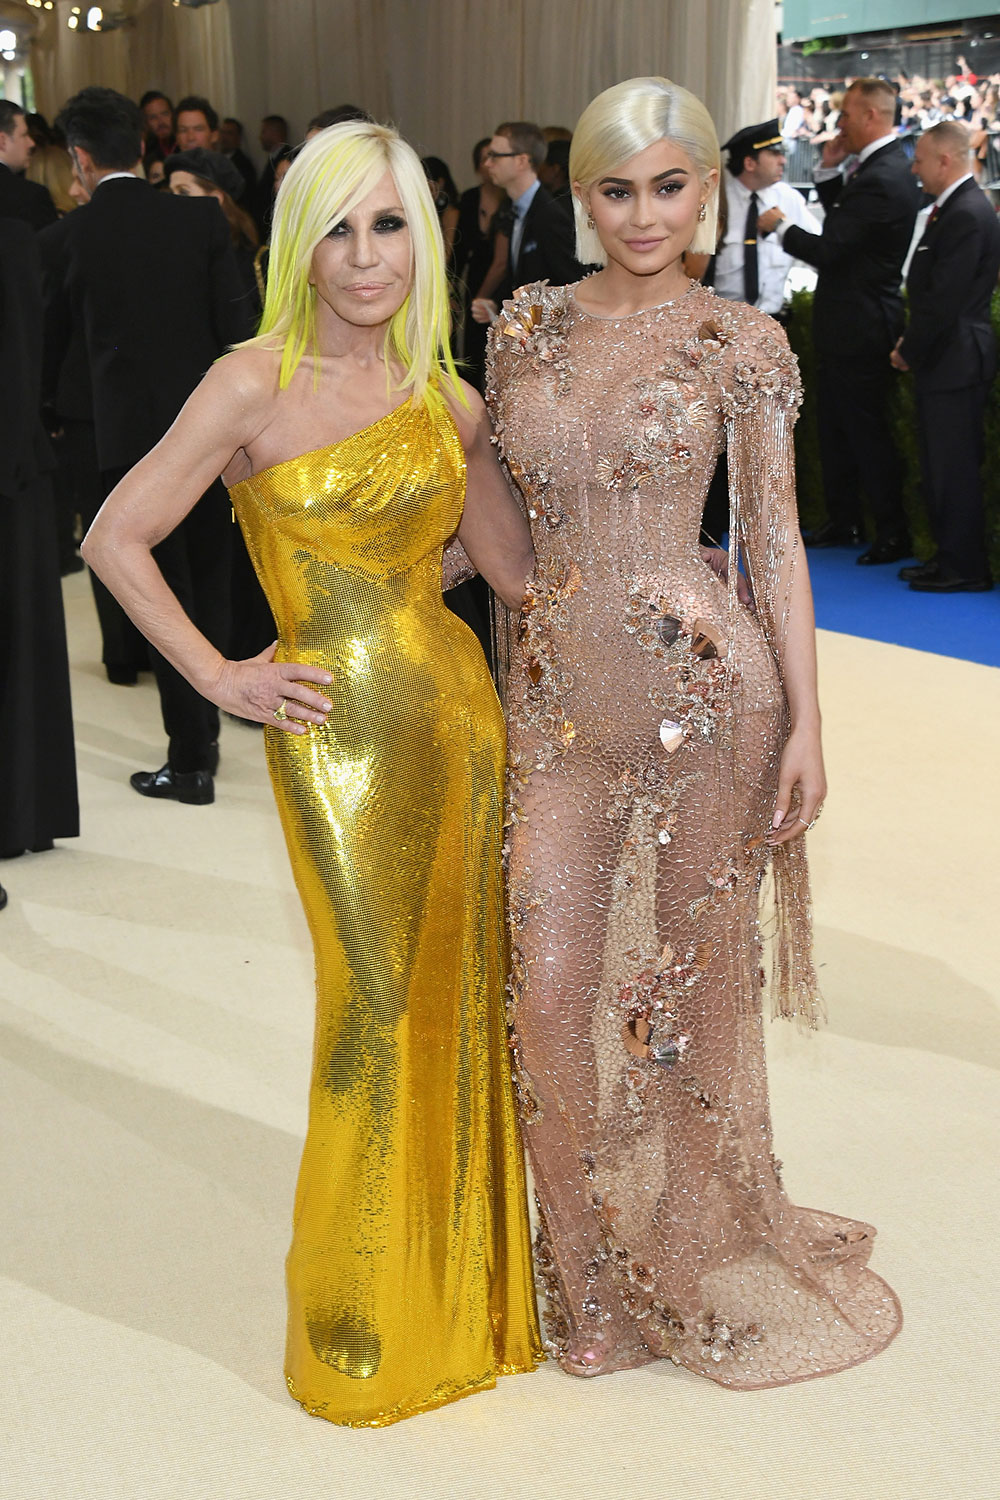 Donatella Versace and Kylie Jenner, wearing Versace.